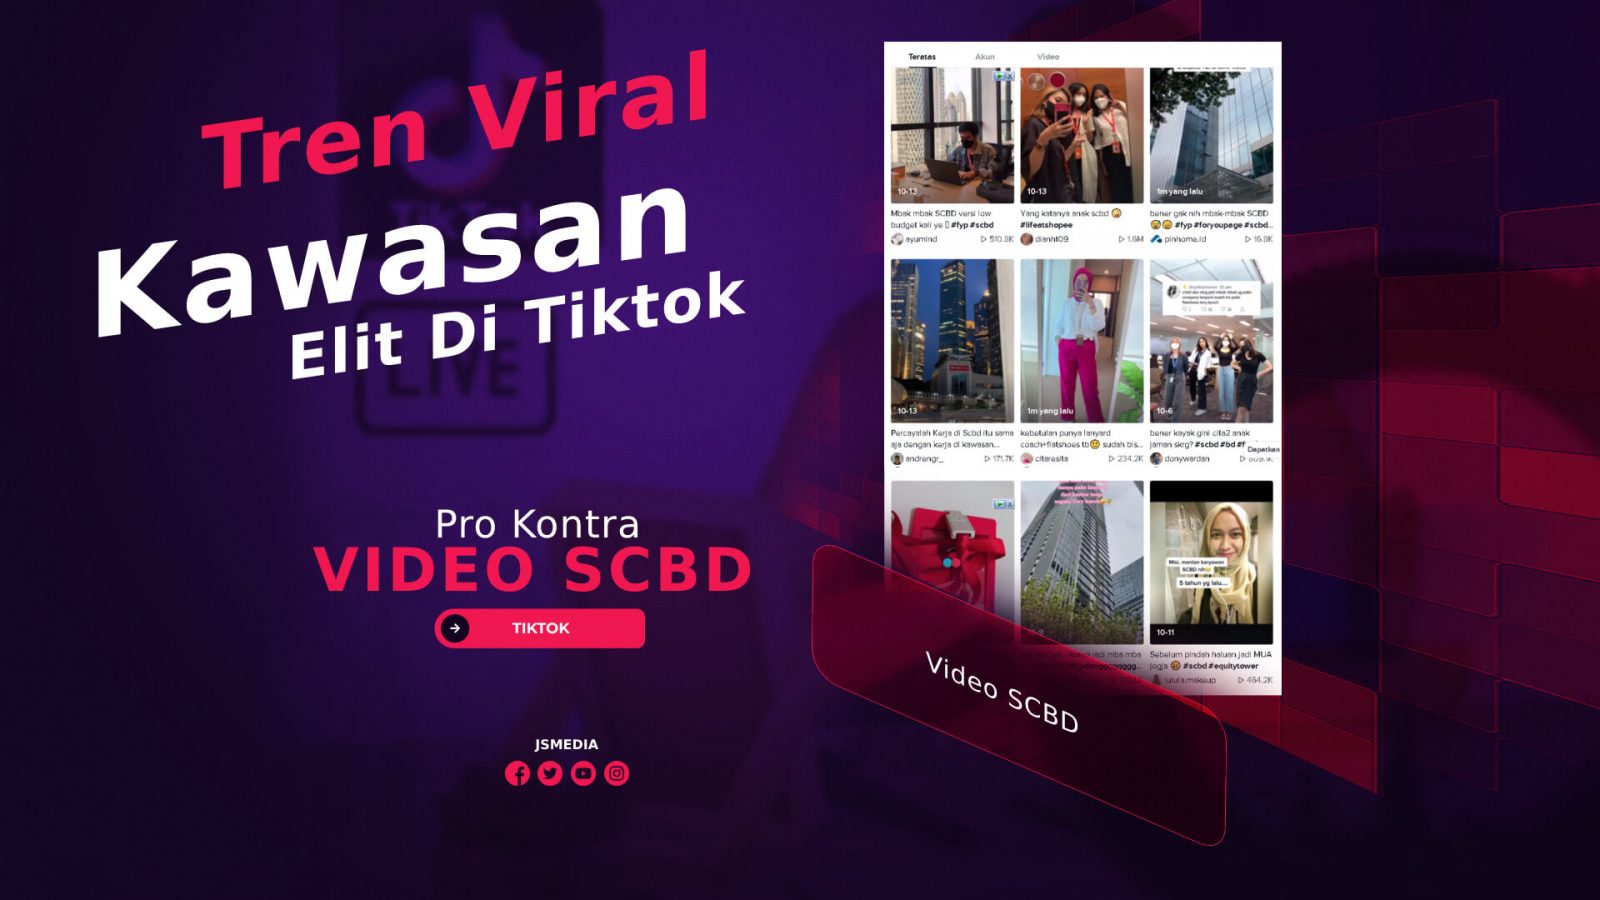 Pro Kontra Video SCBD Tren Viral di TikTok